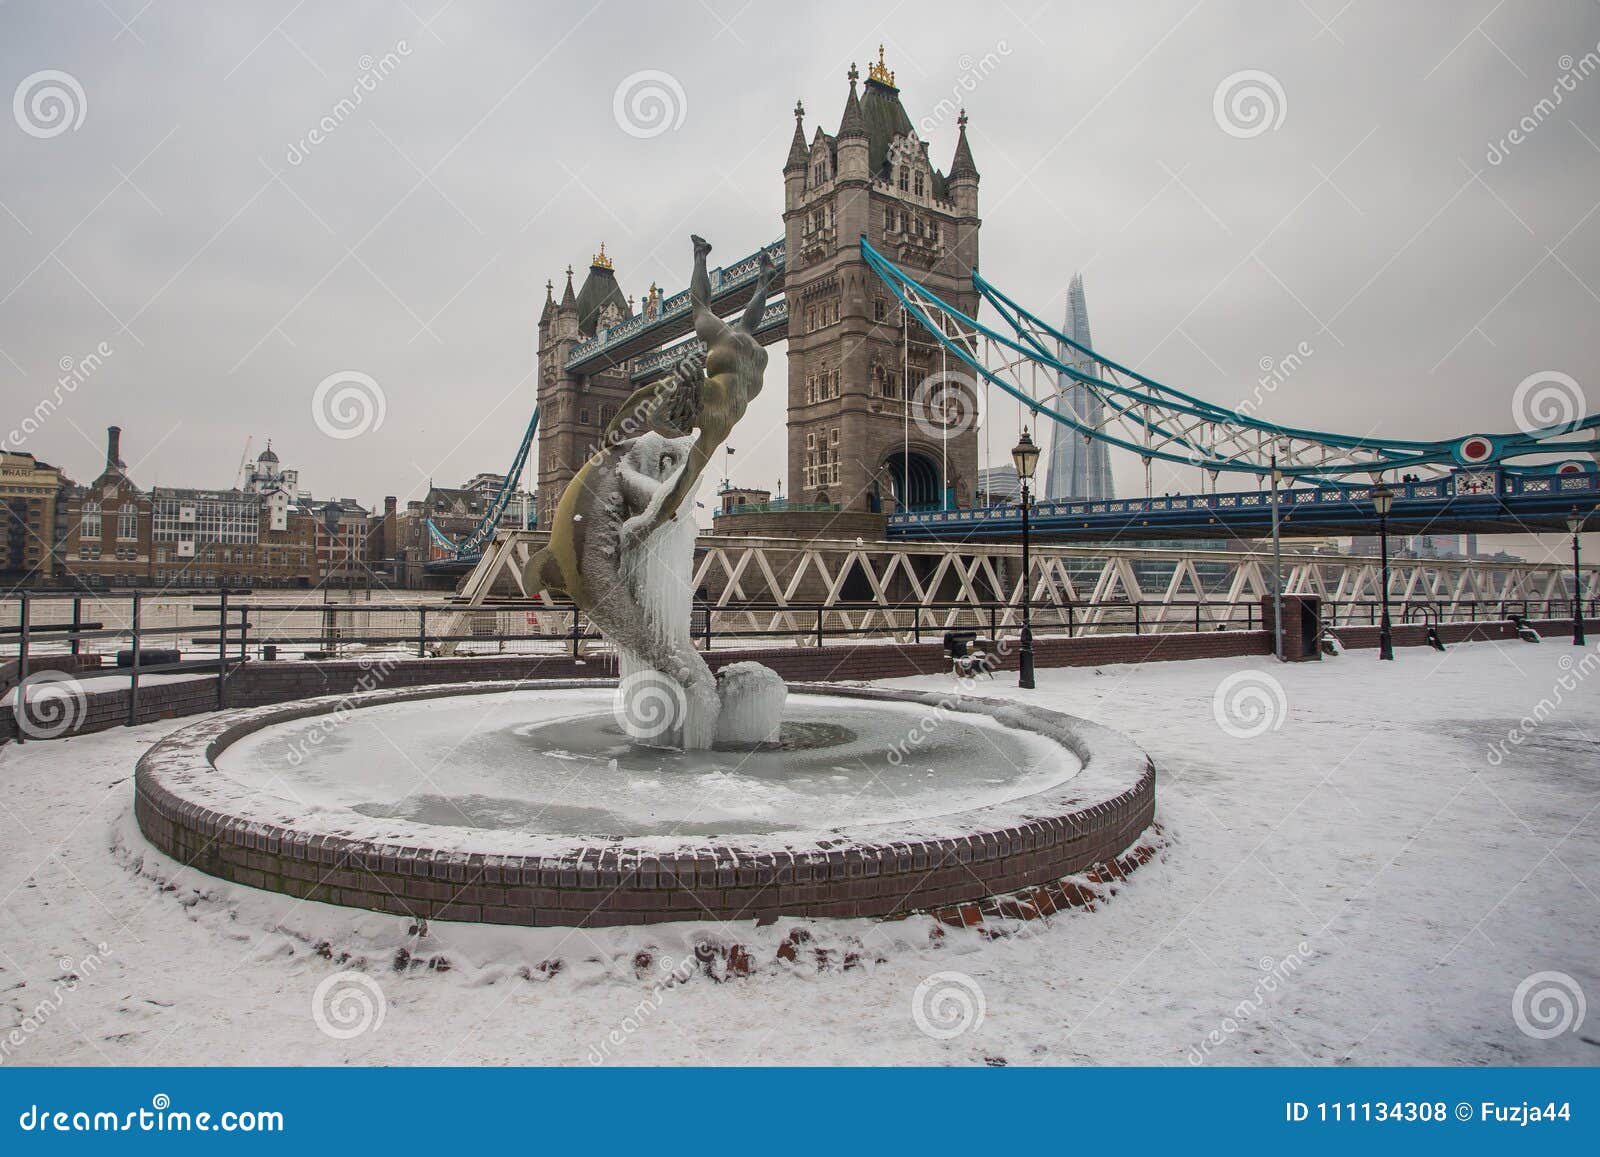 London Schneekugel Tower Bridge Big Ben England Snowglobe Snowstorm ! 